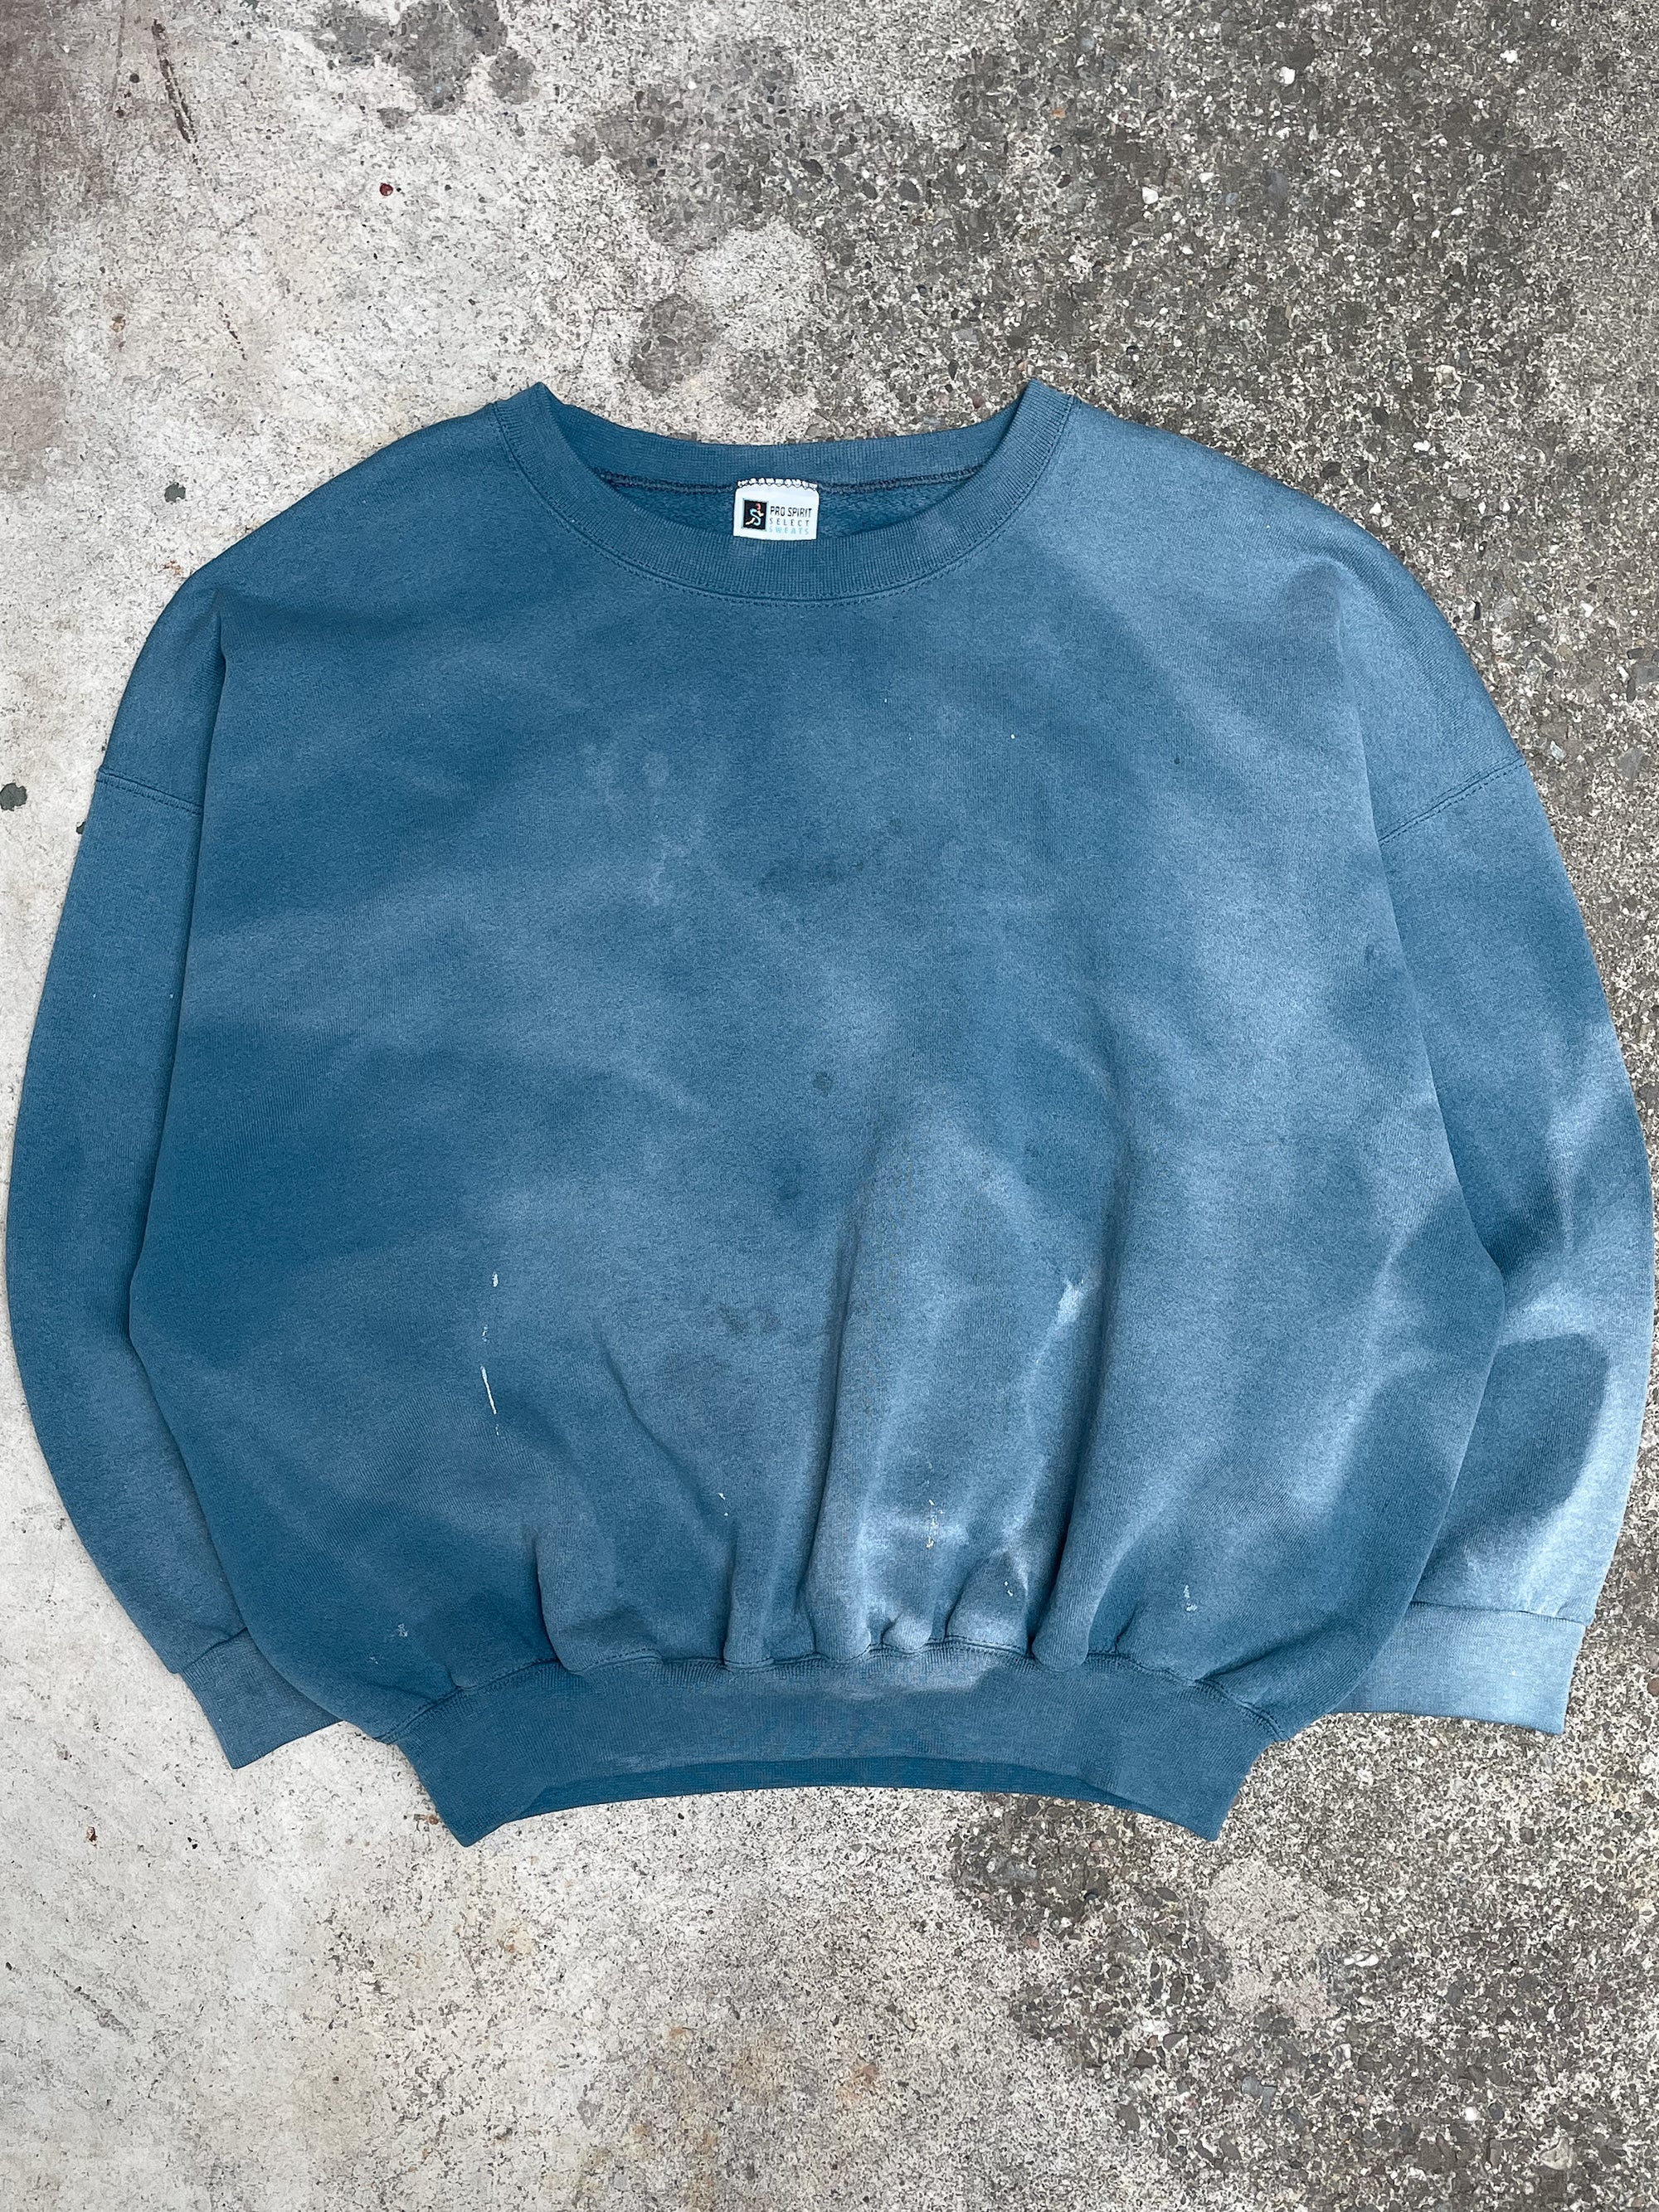 1990s Sun Faded Blue Sweatshirt (XXL)